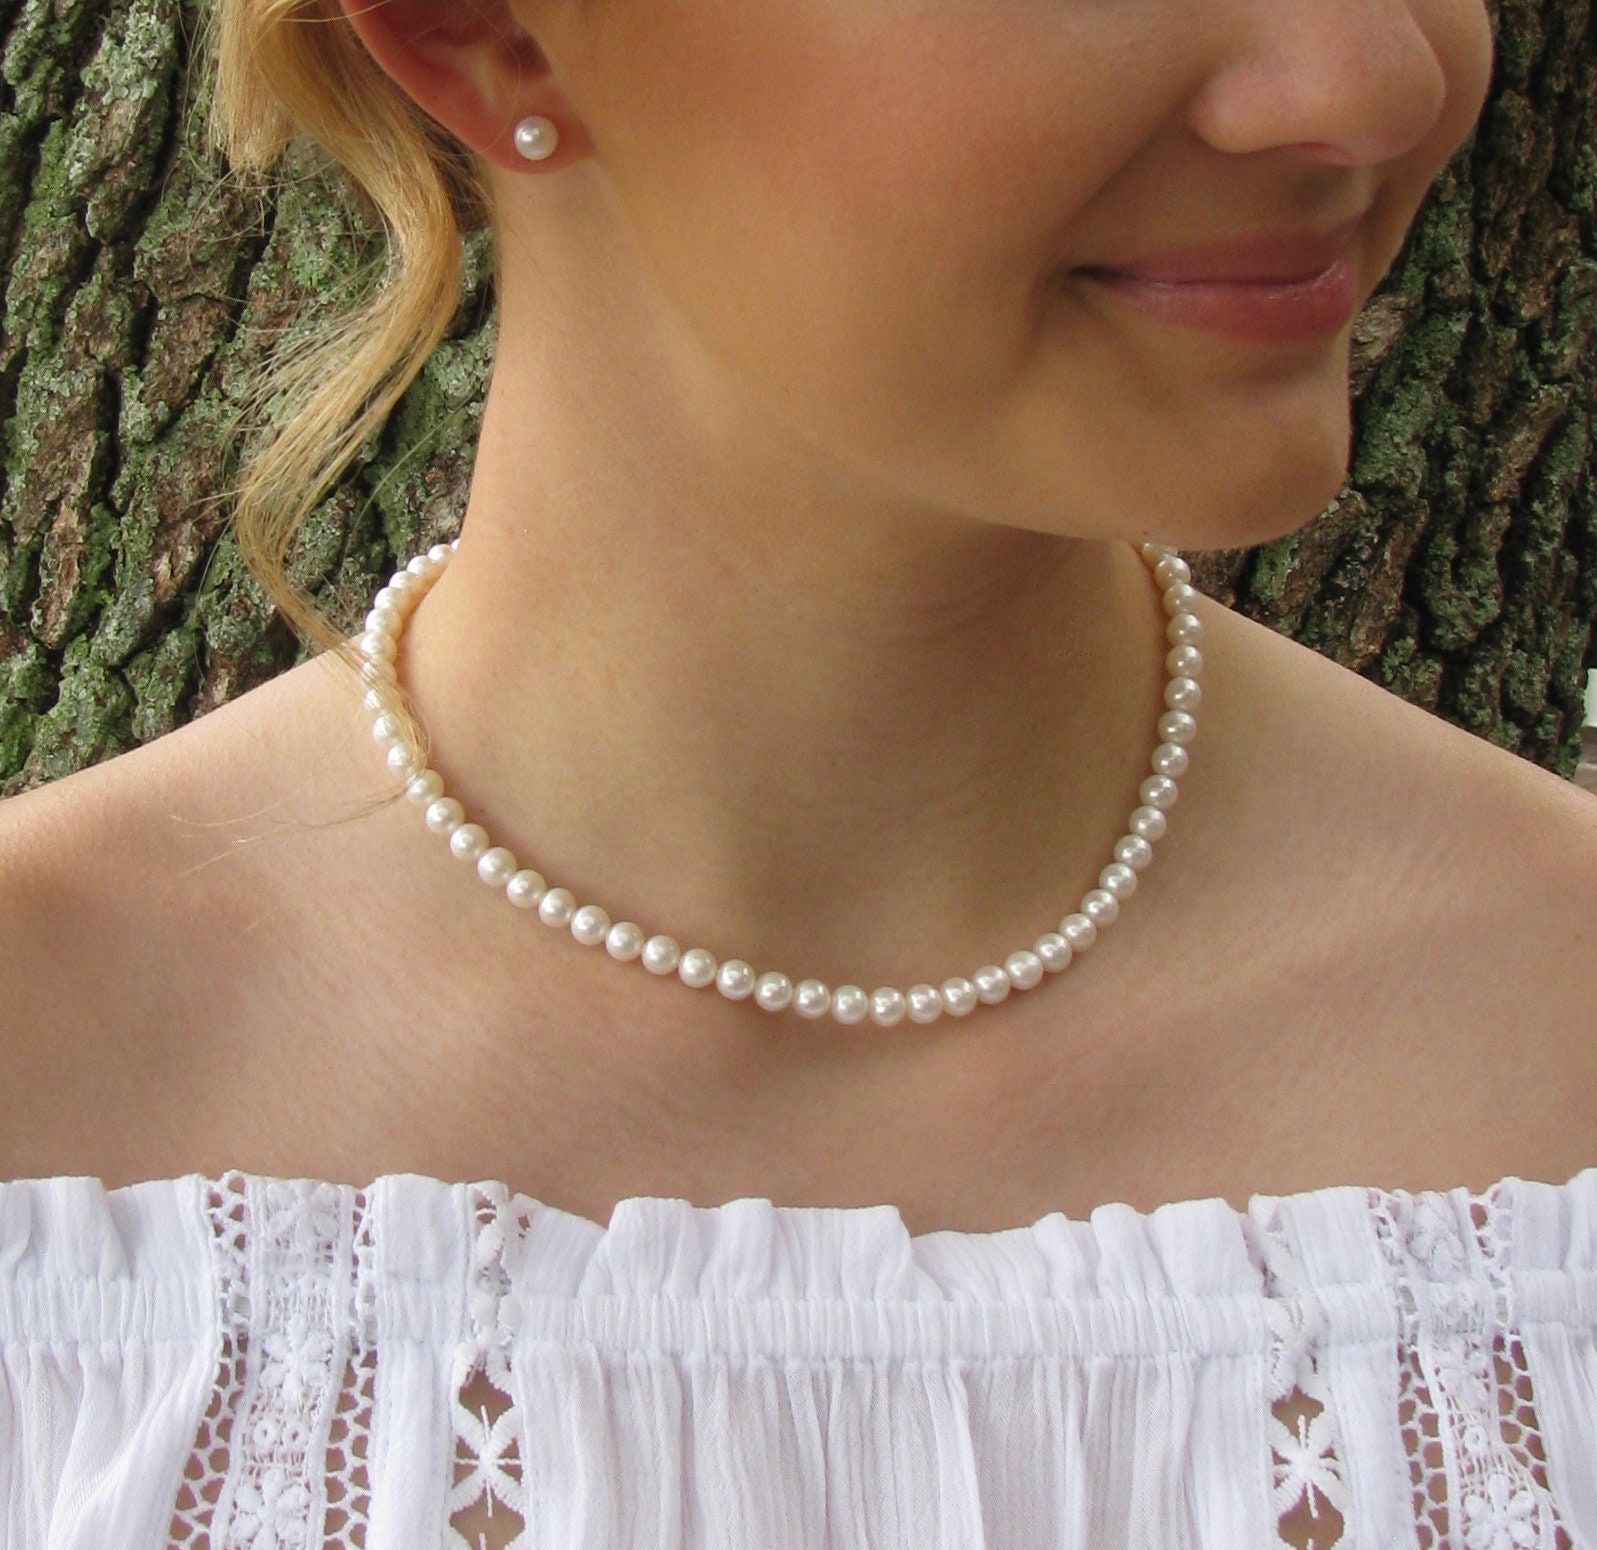 8.0-8.5mm Freshwater Pearl Necklace & Earrings